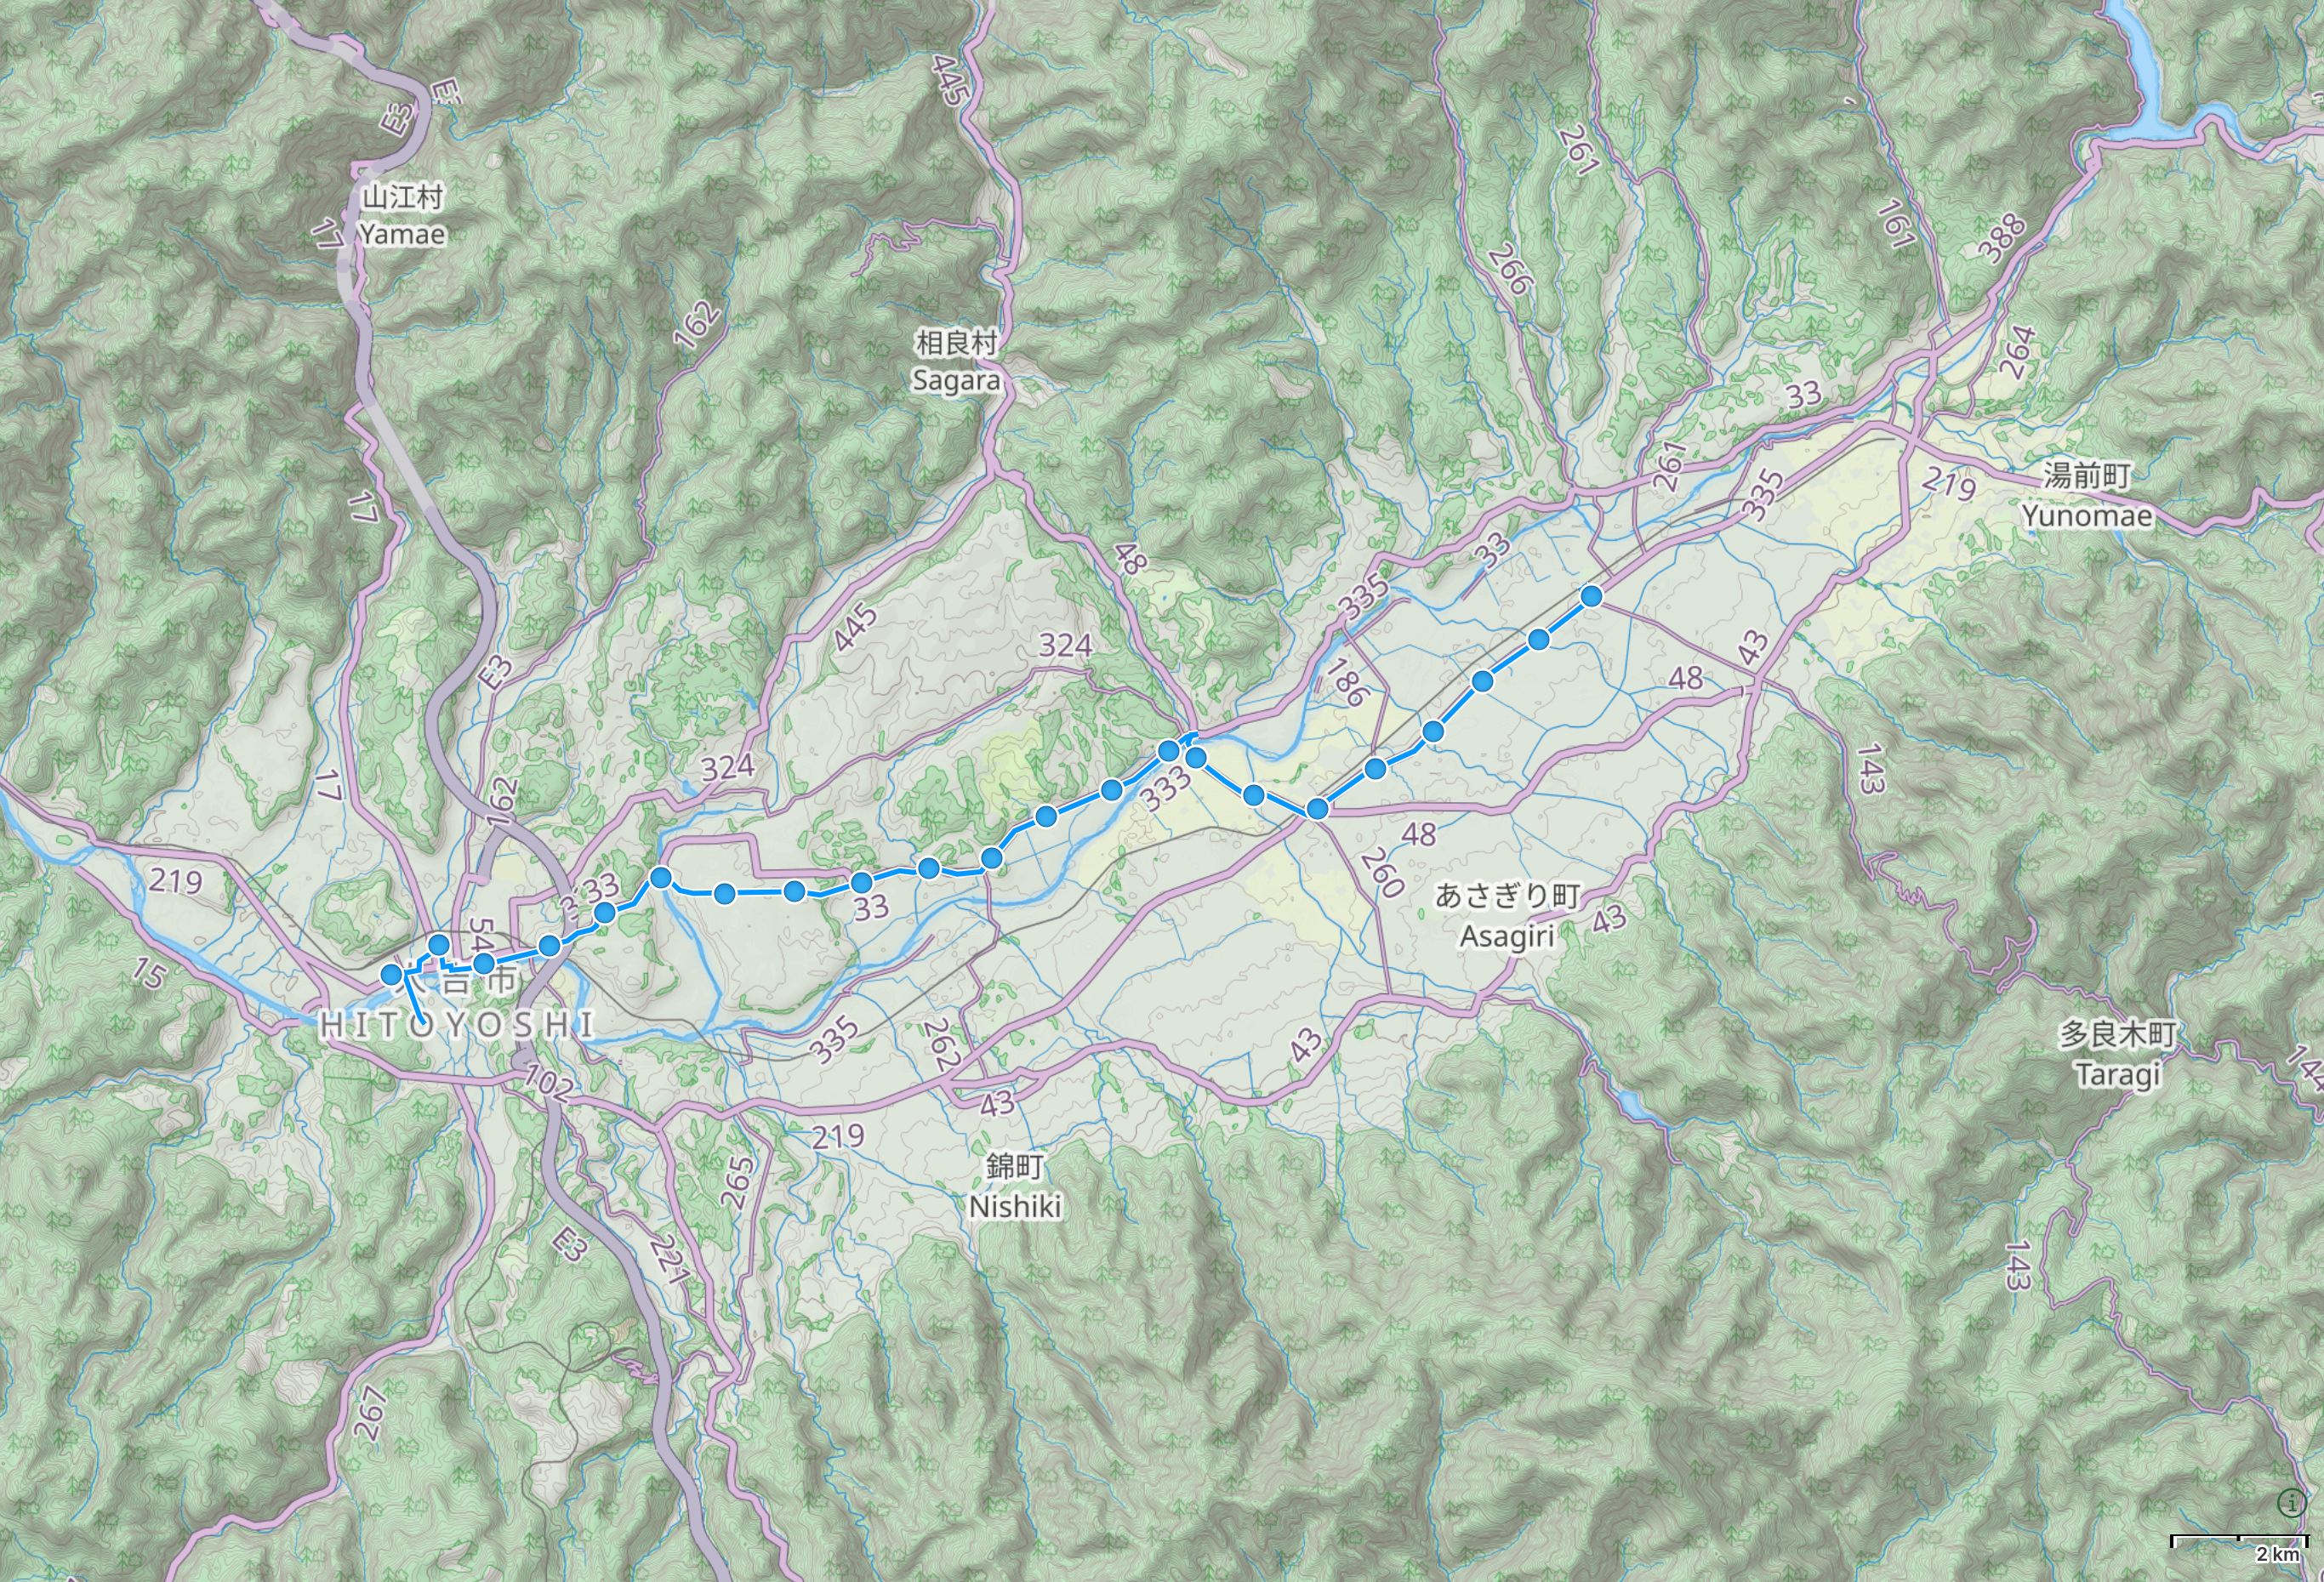 Map of Kumamoto with author’s route from Hitoyoshi to Taragi highlighted.